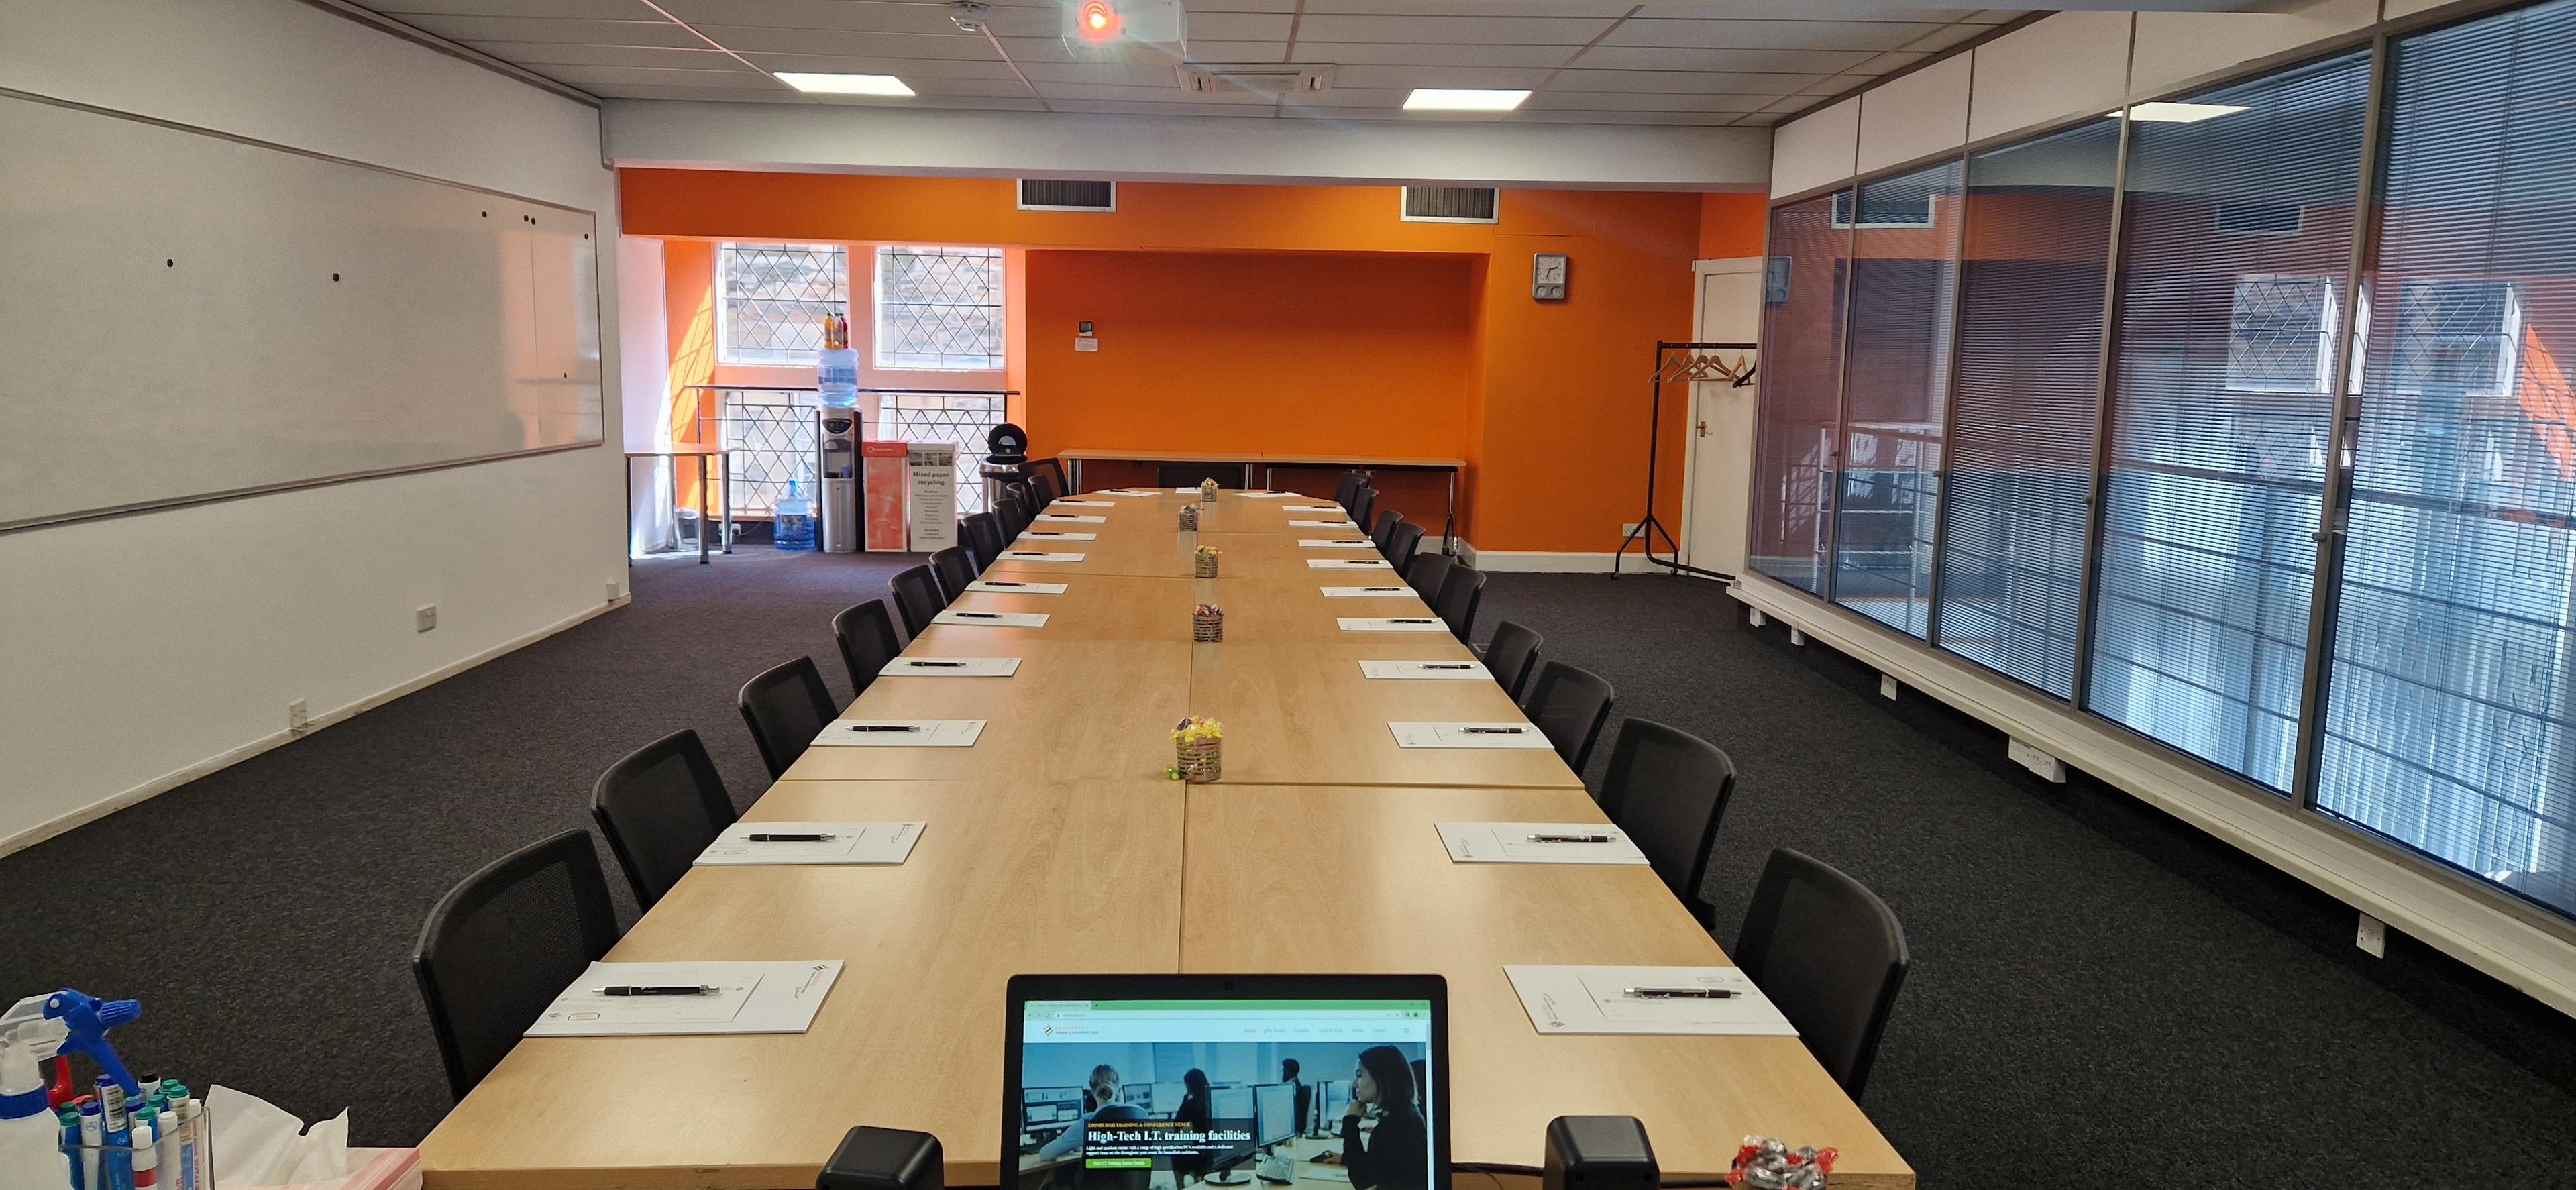 Hybrid Meeting Space, Edinburgh Training And Conference Venue photo #2